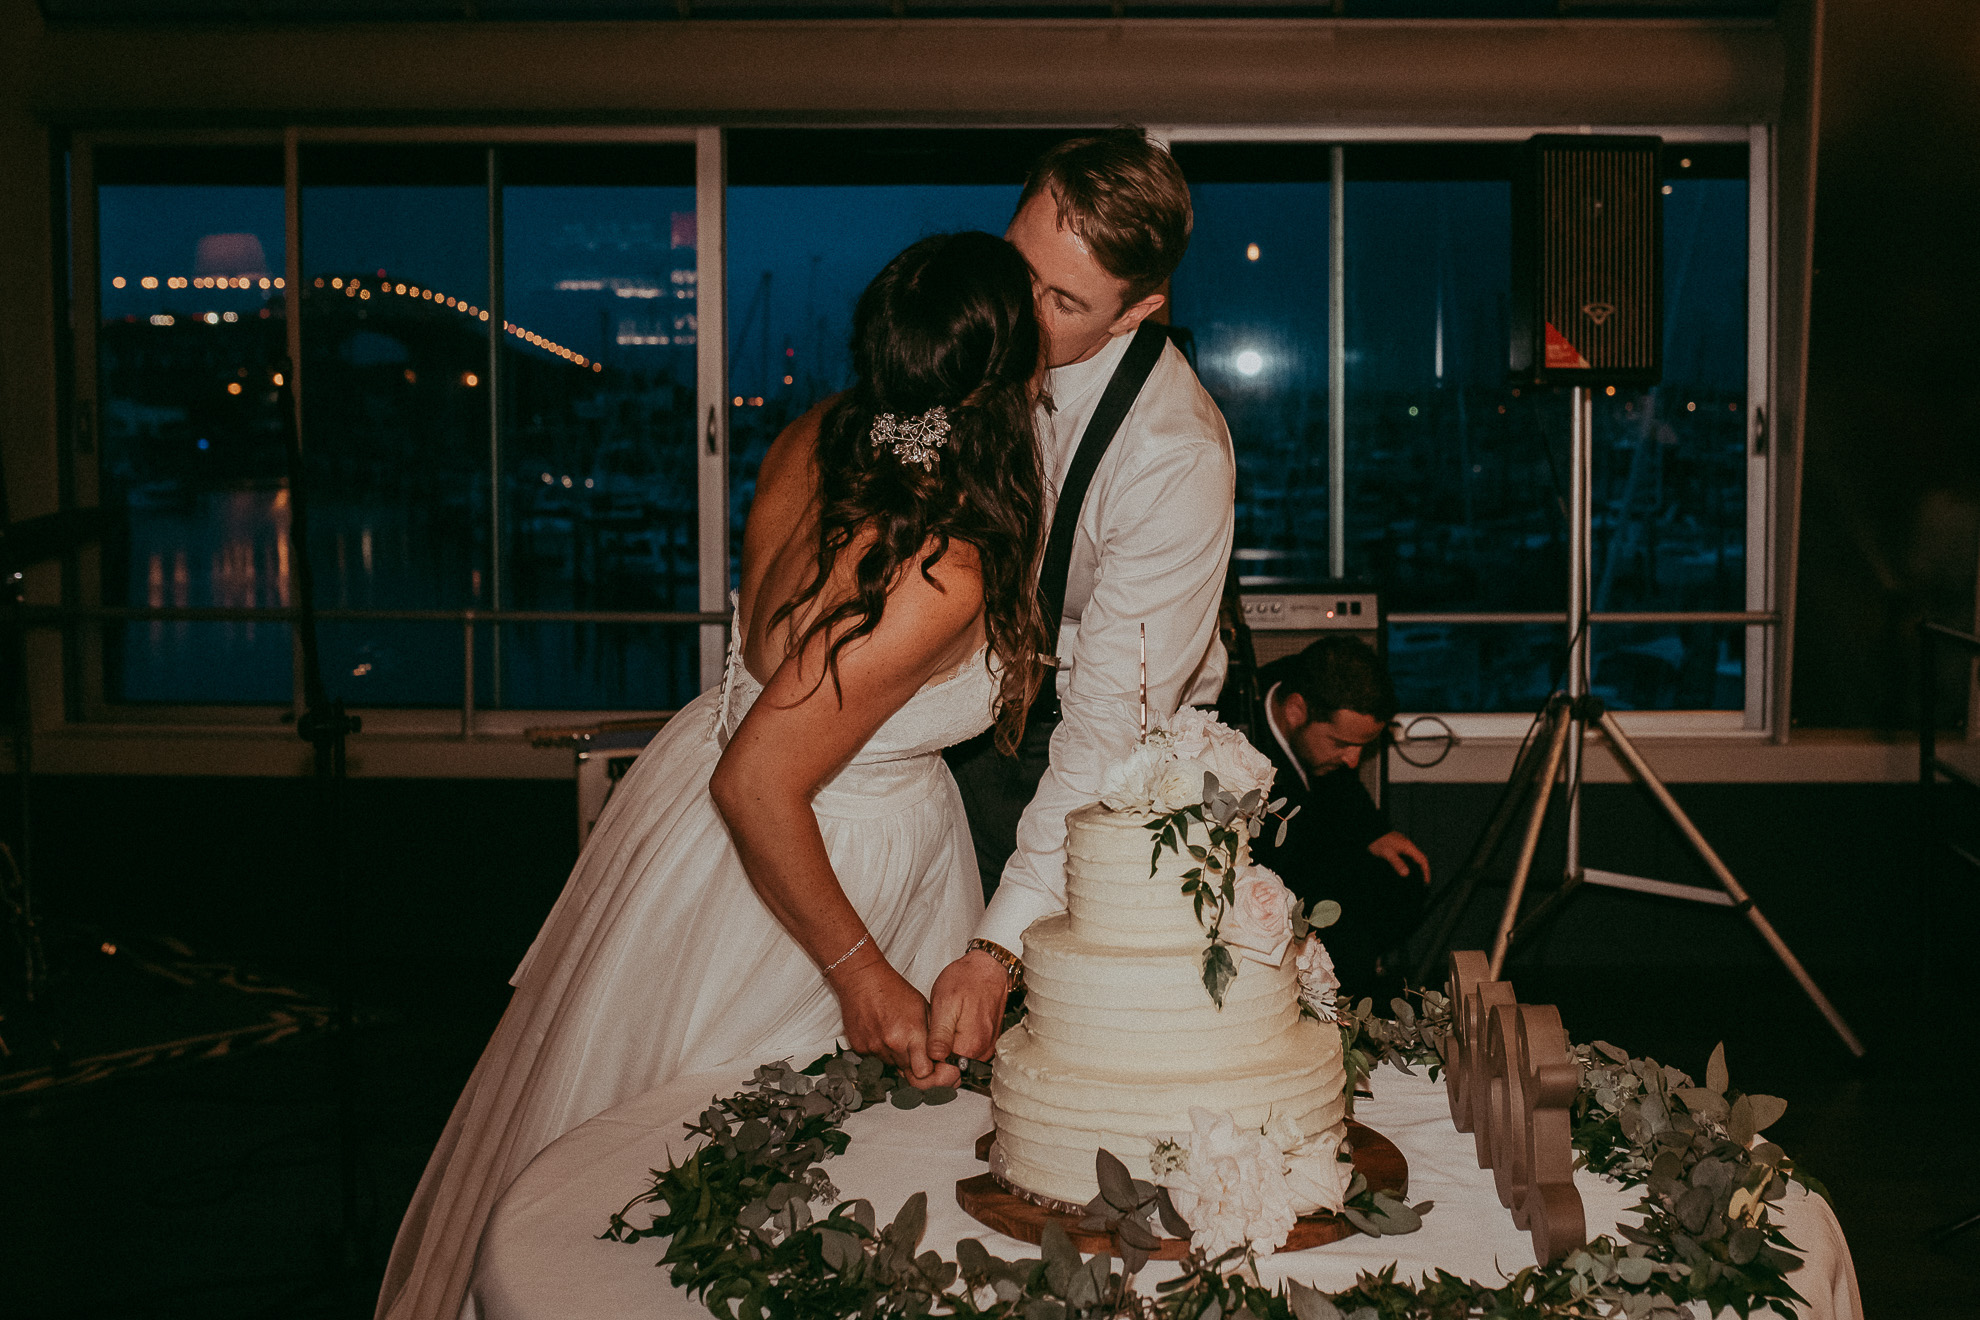 Sails - Auckland City wedding - natural documentary top weddings photographers